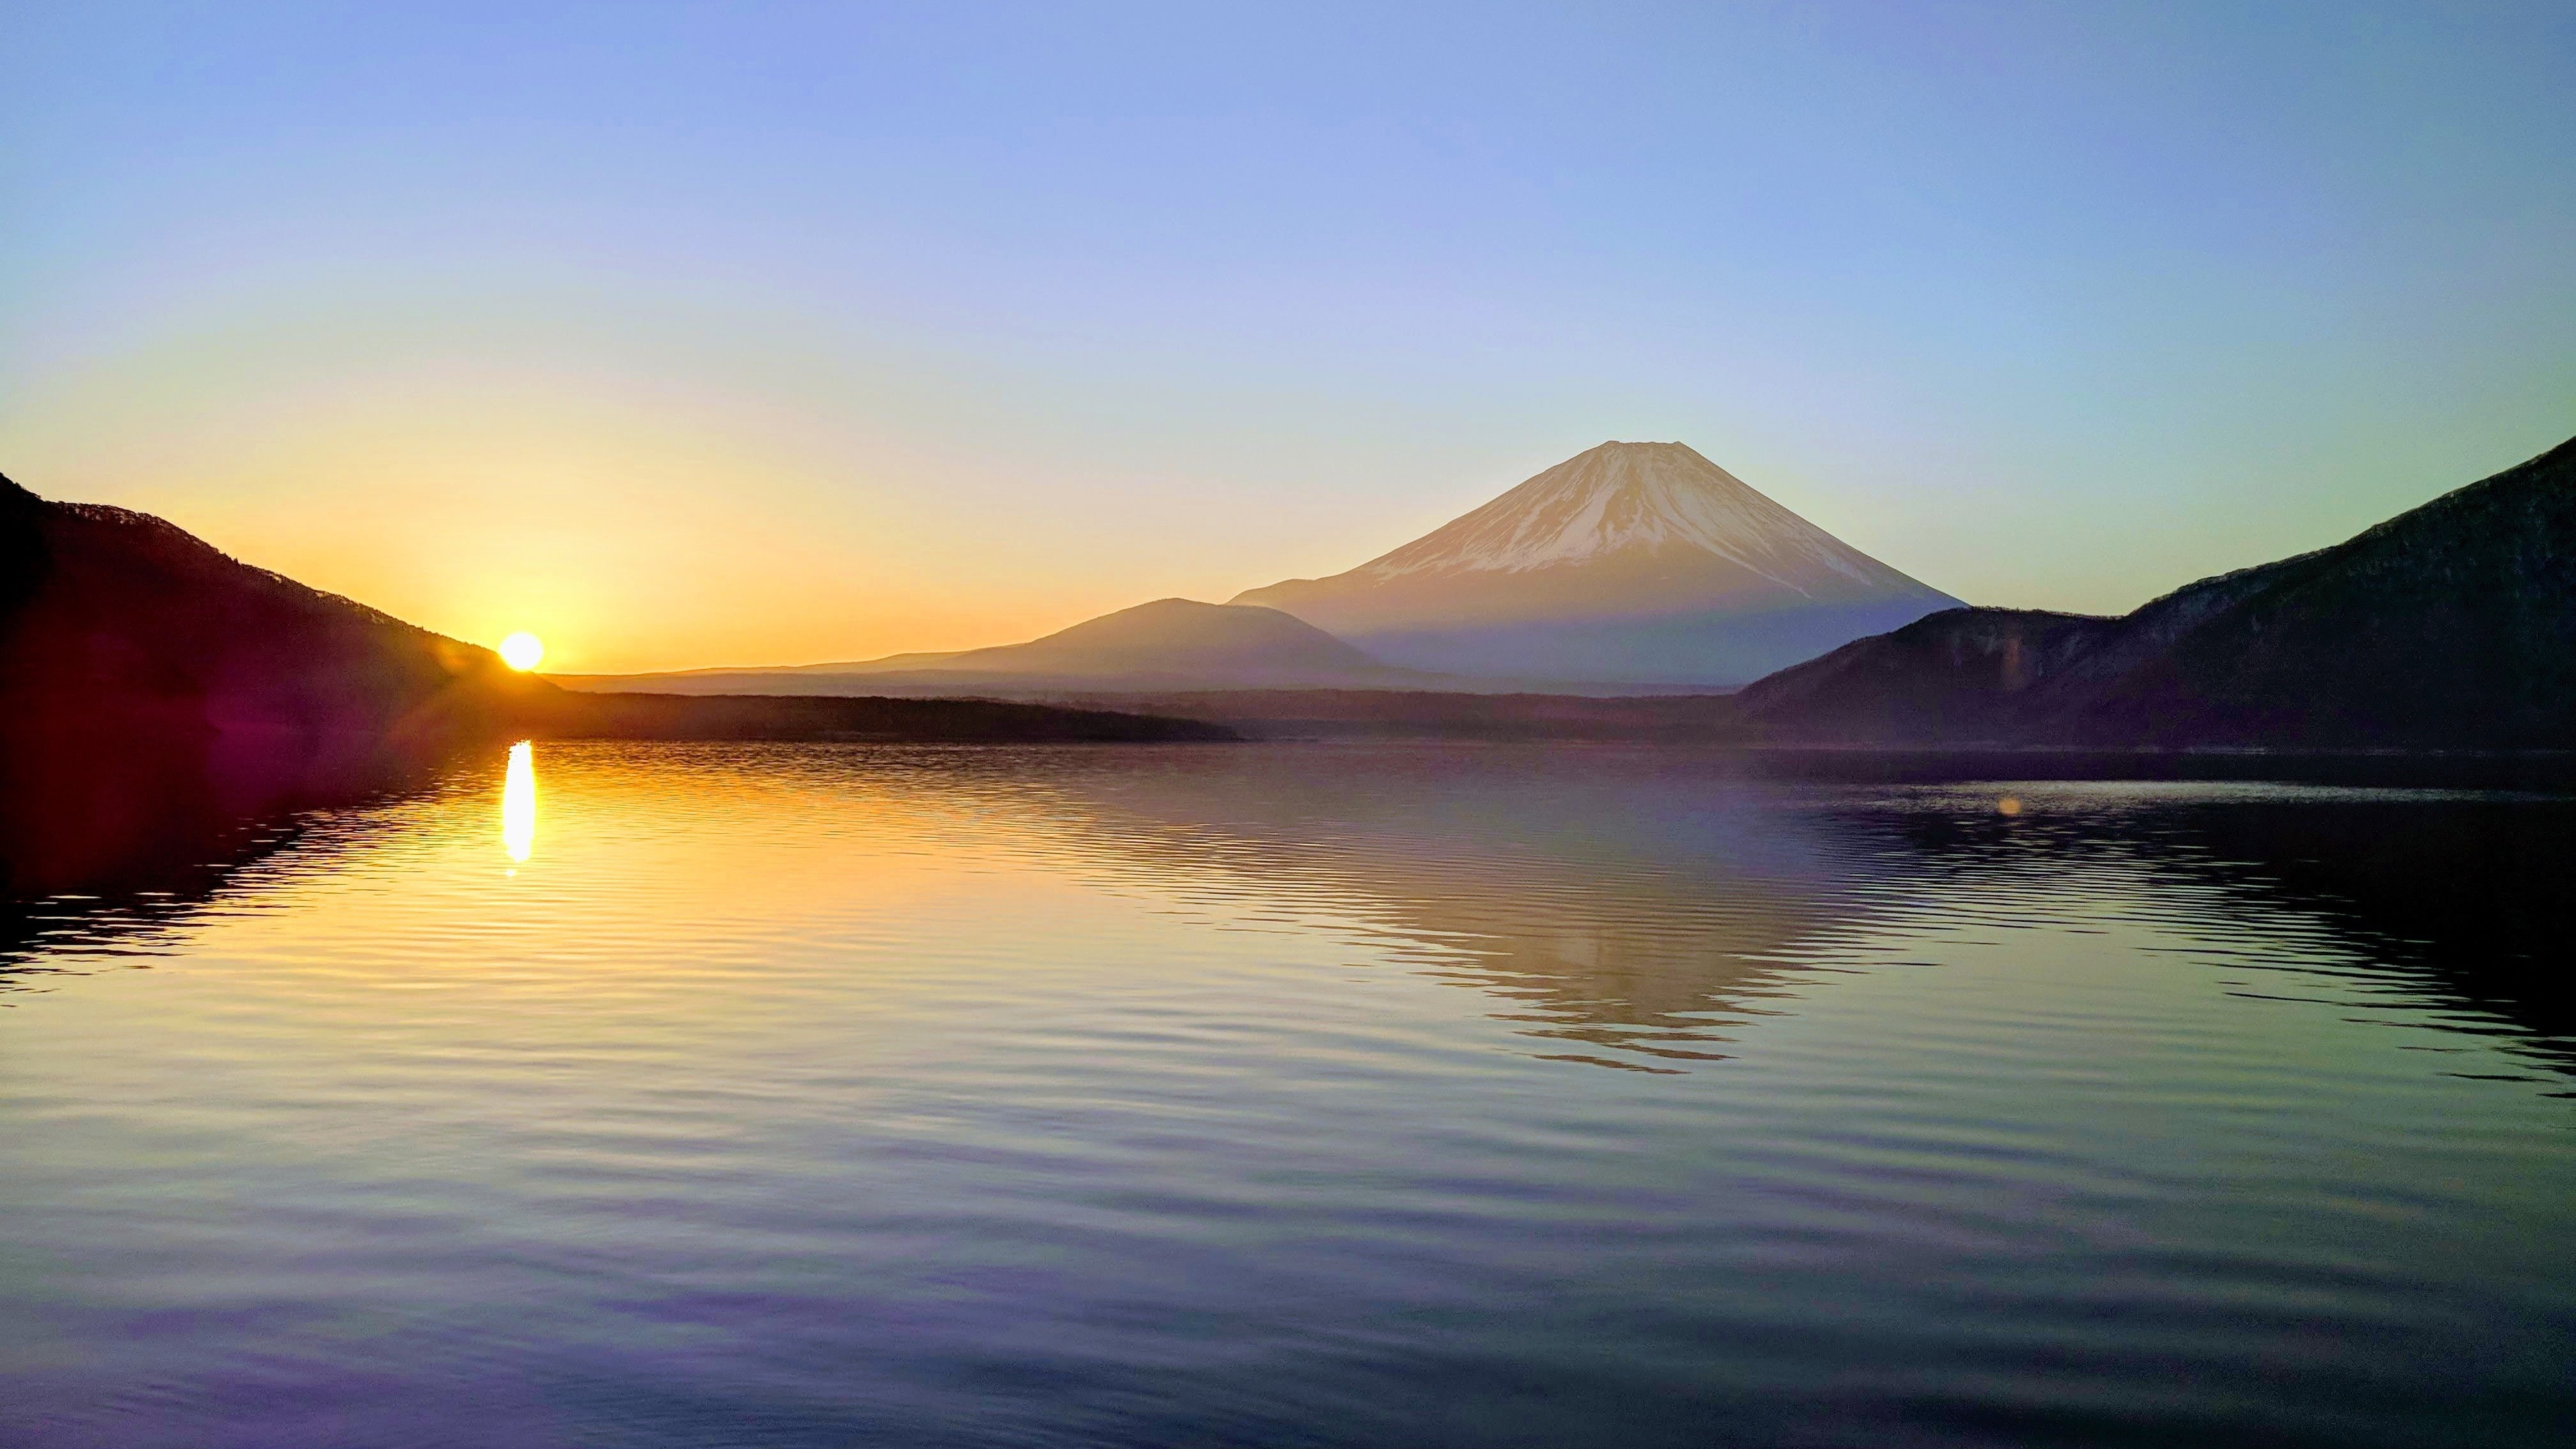 3840x2160 Mount Fuji 4k 4k HD 4k Wallpapers, Images ...